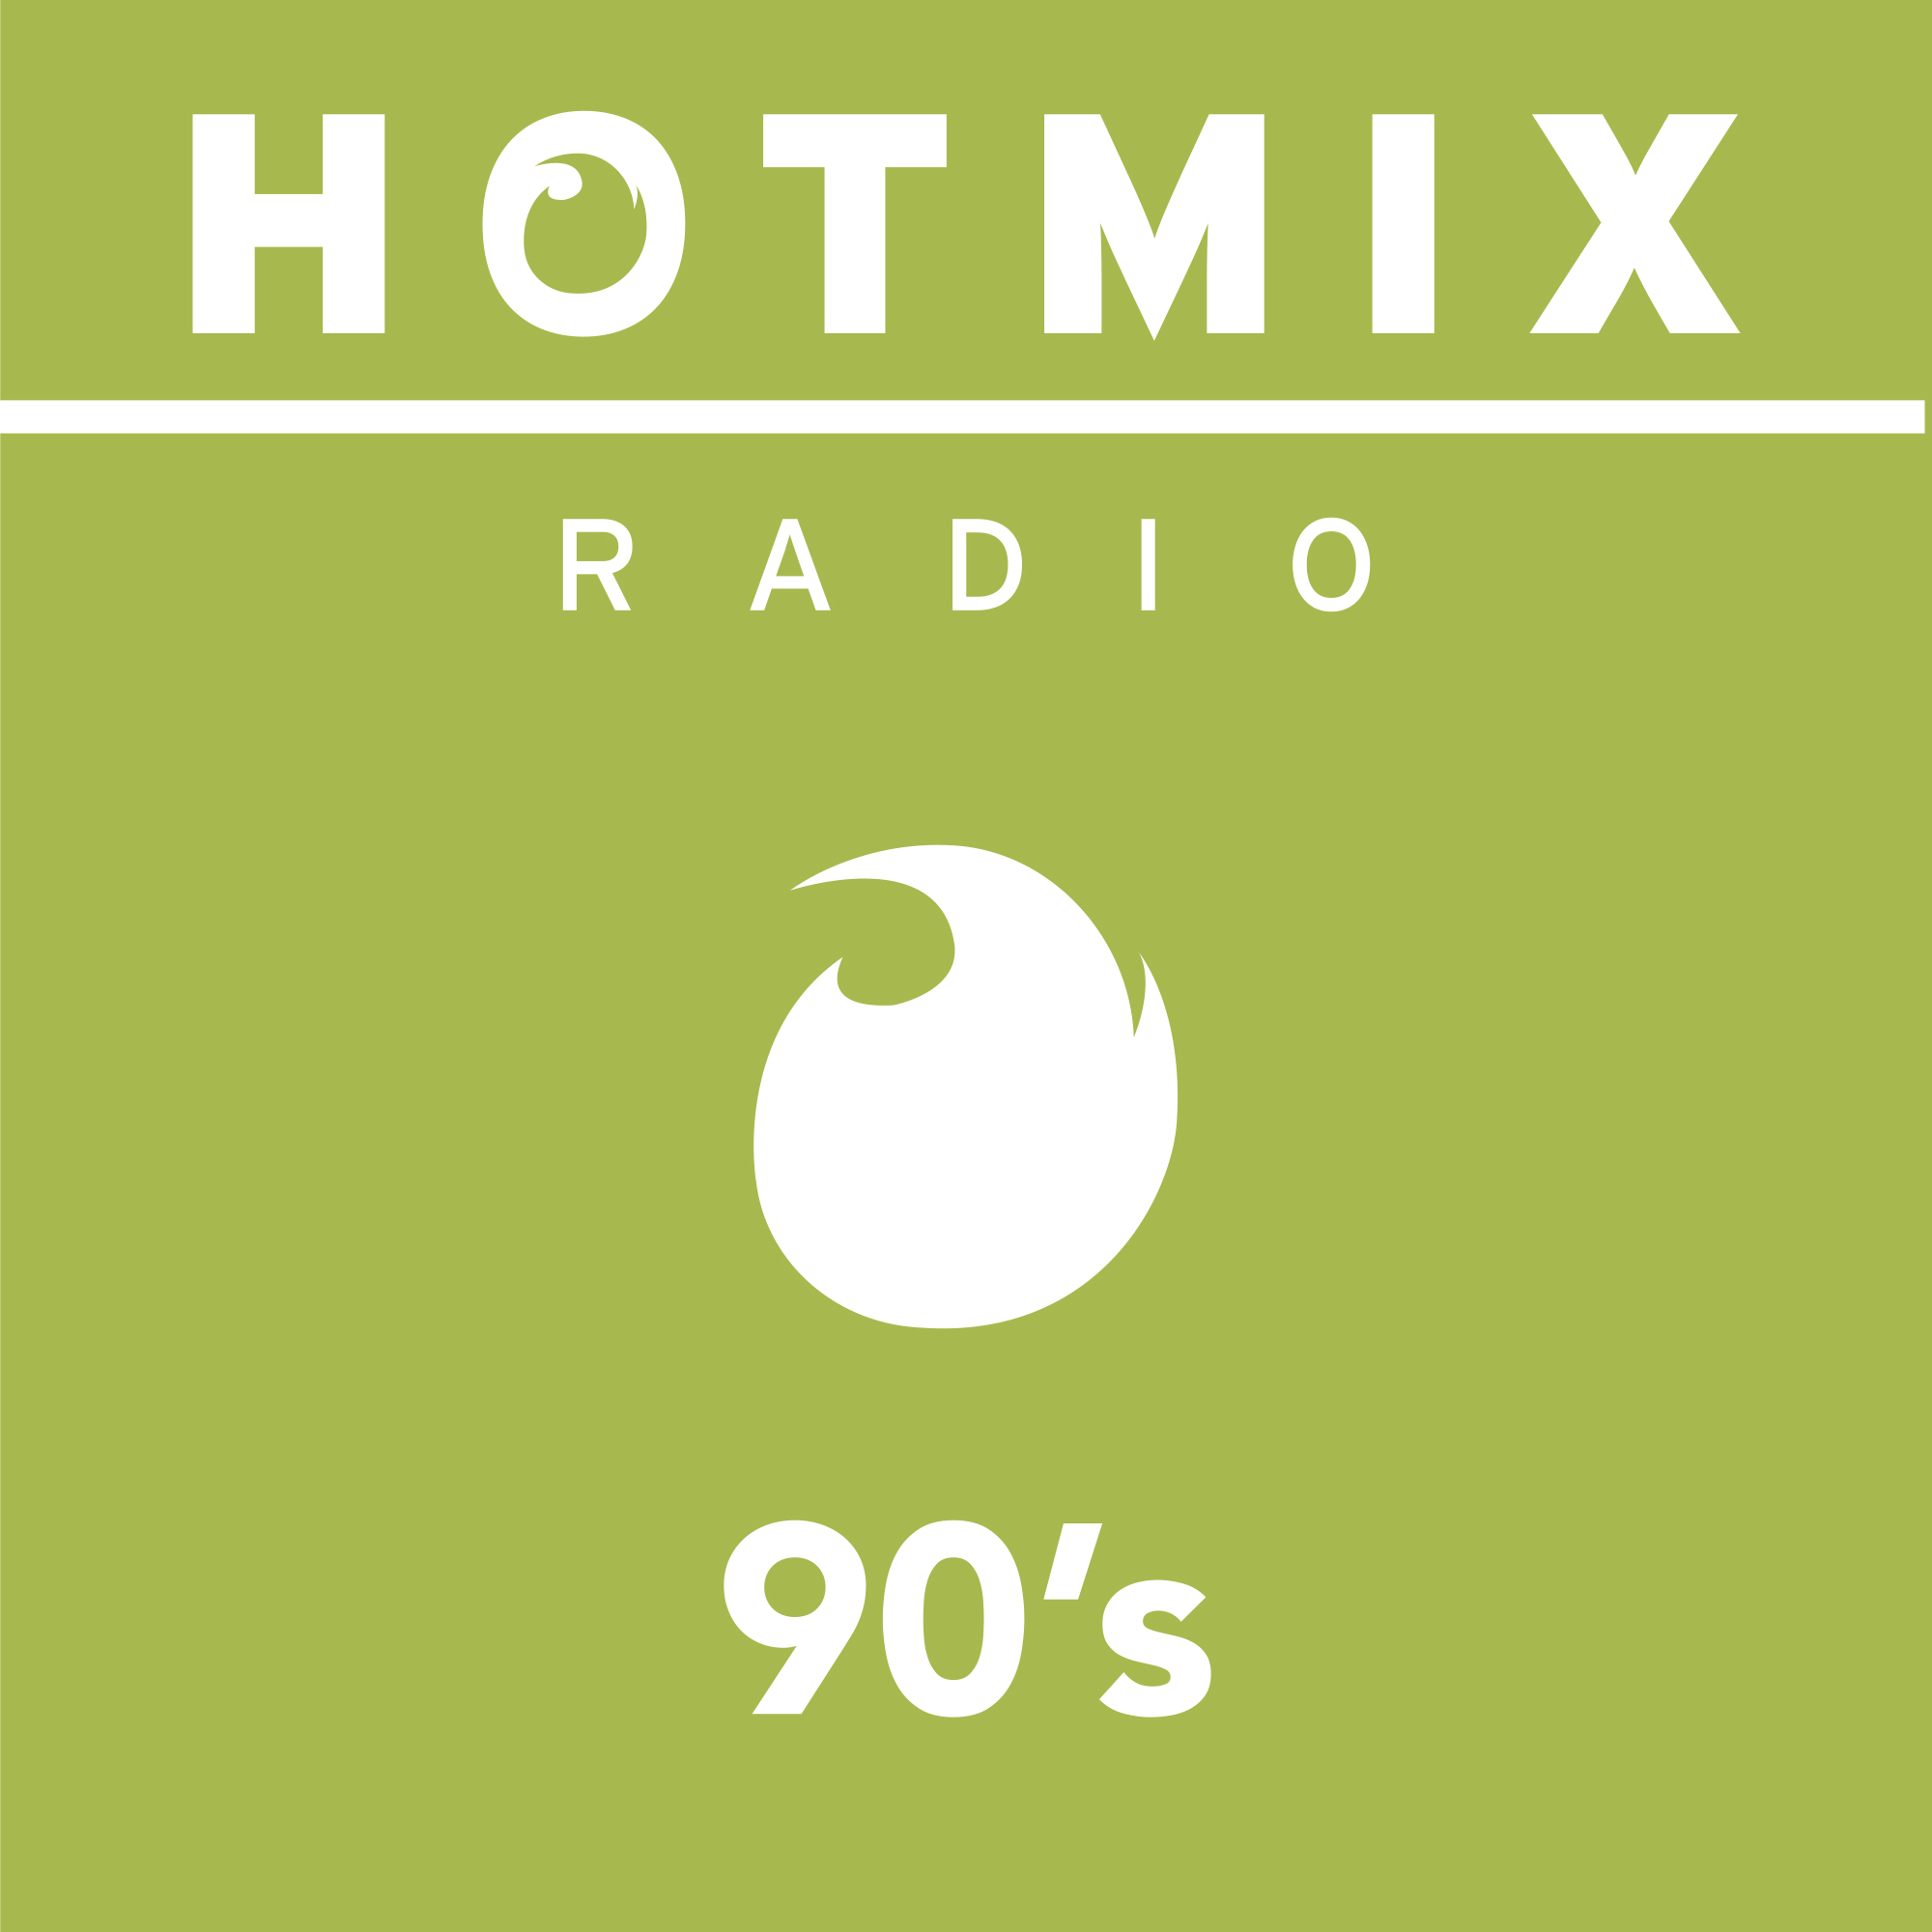 Hotmixradio 90